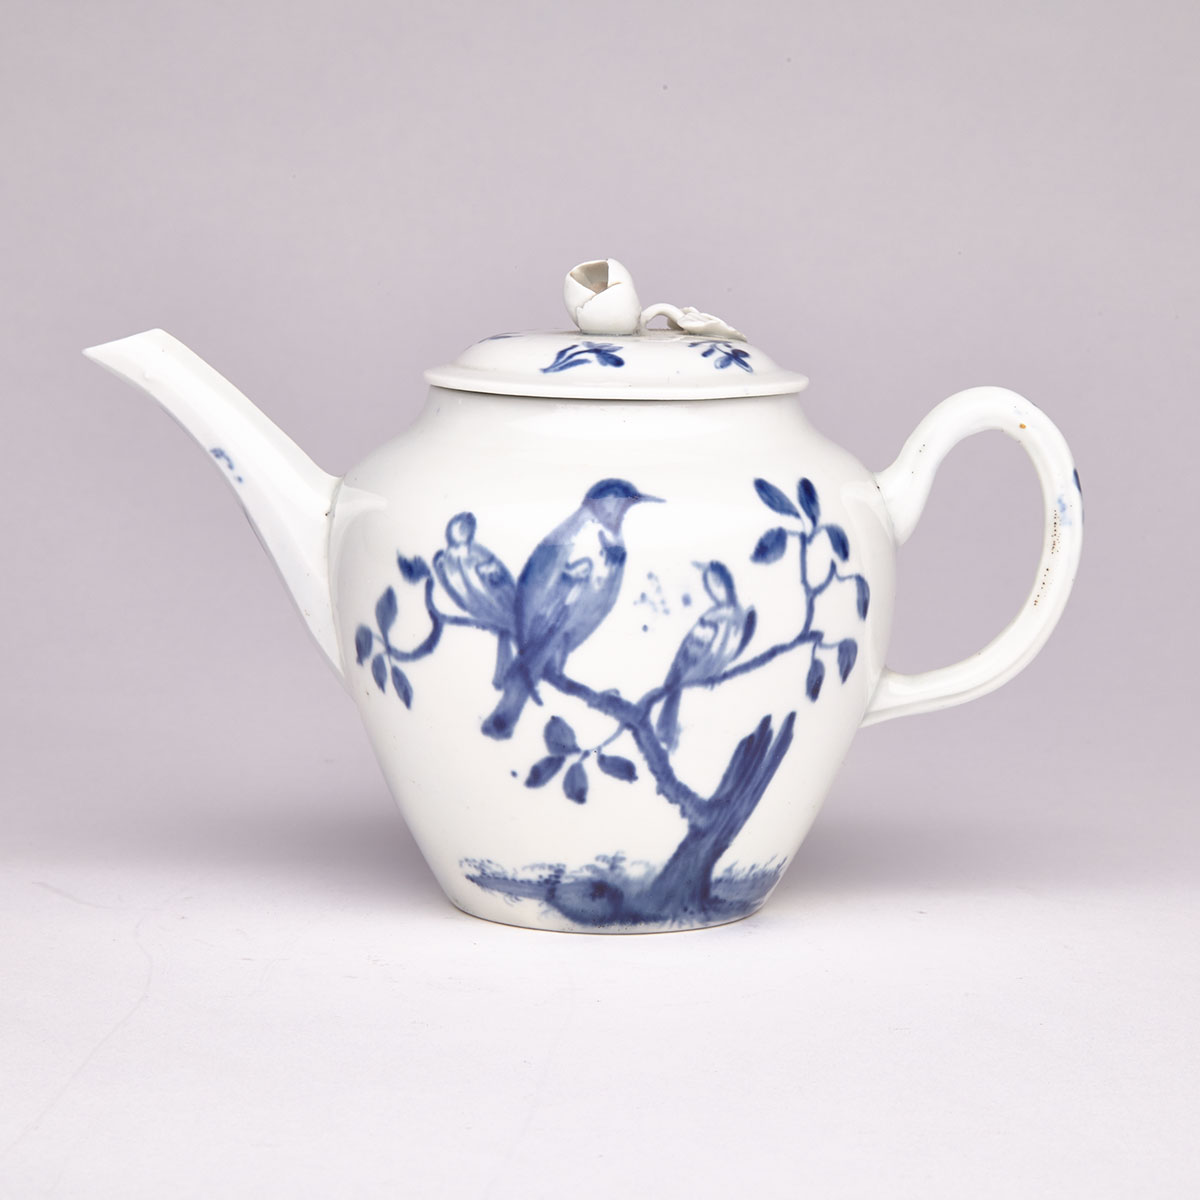 Worcester ‘Thrush’ Small Teapot, c. 1760